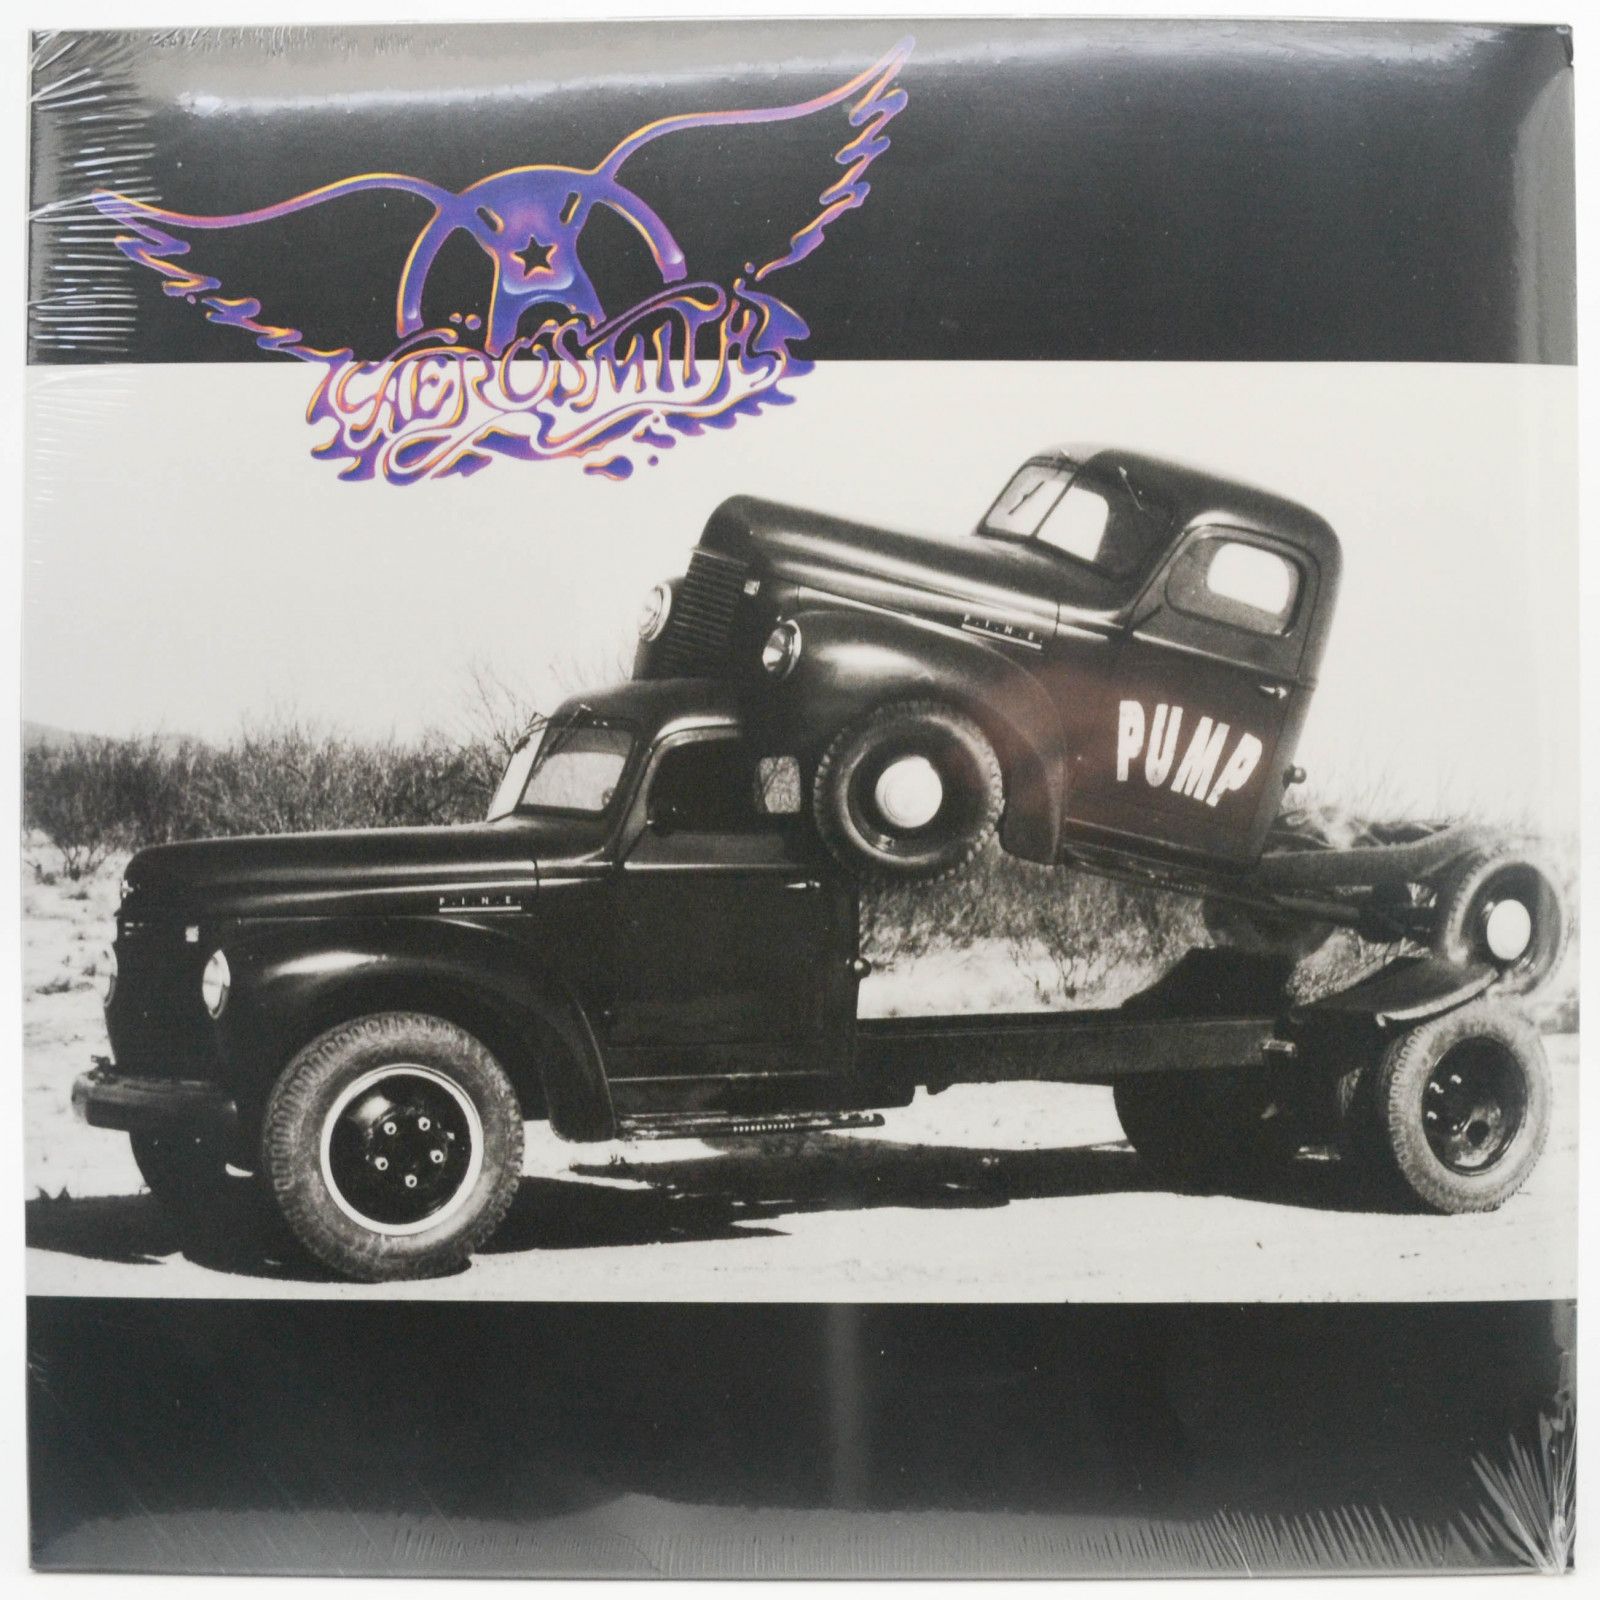 Aerosmith — Pump, 1989